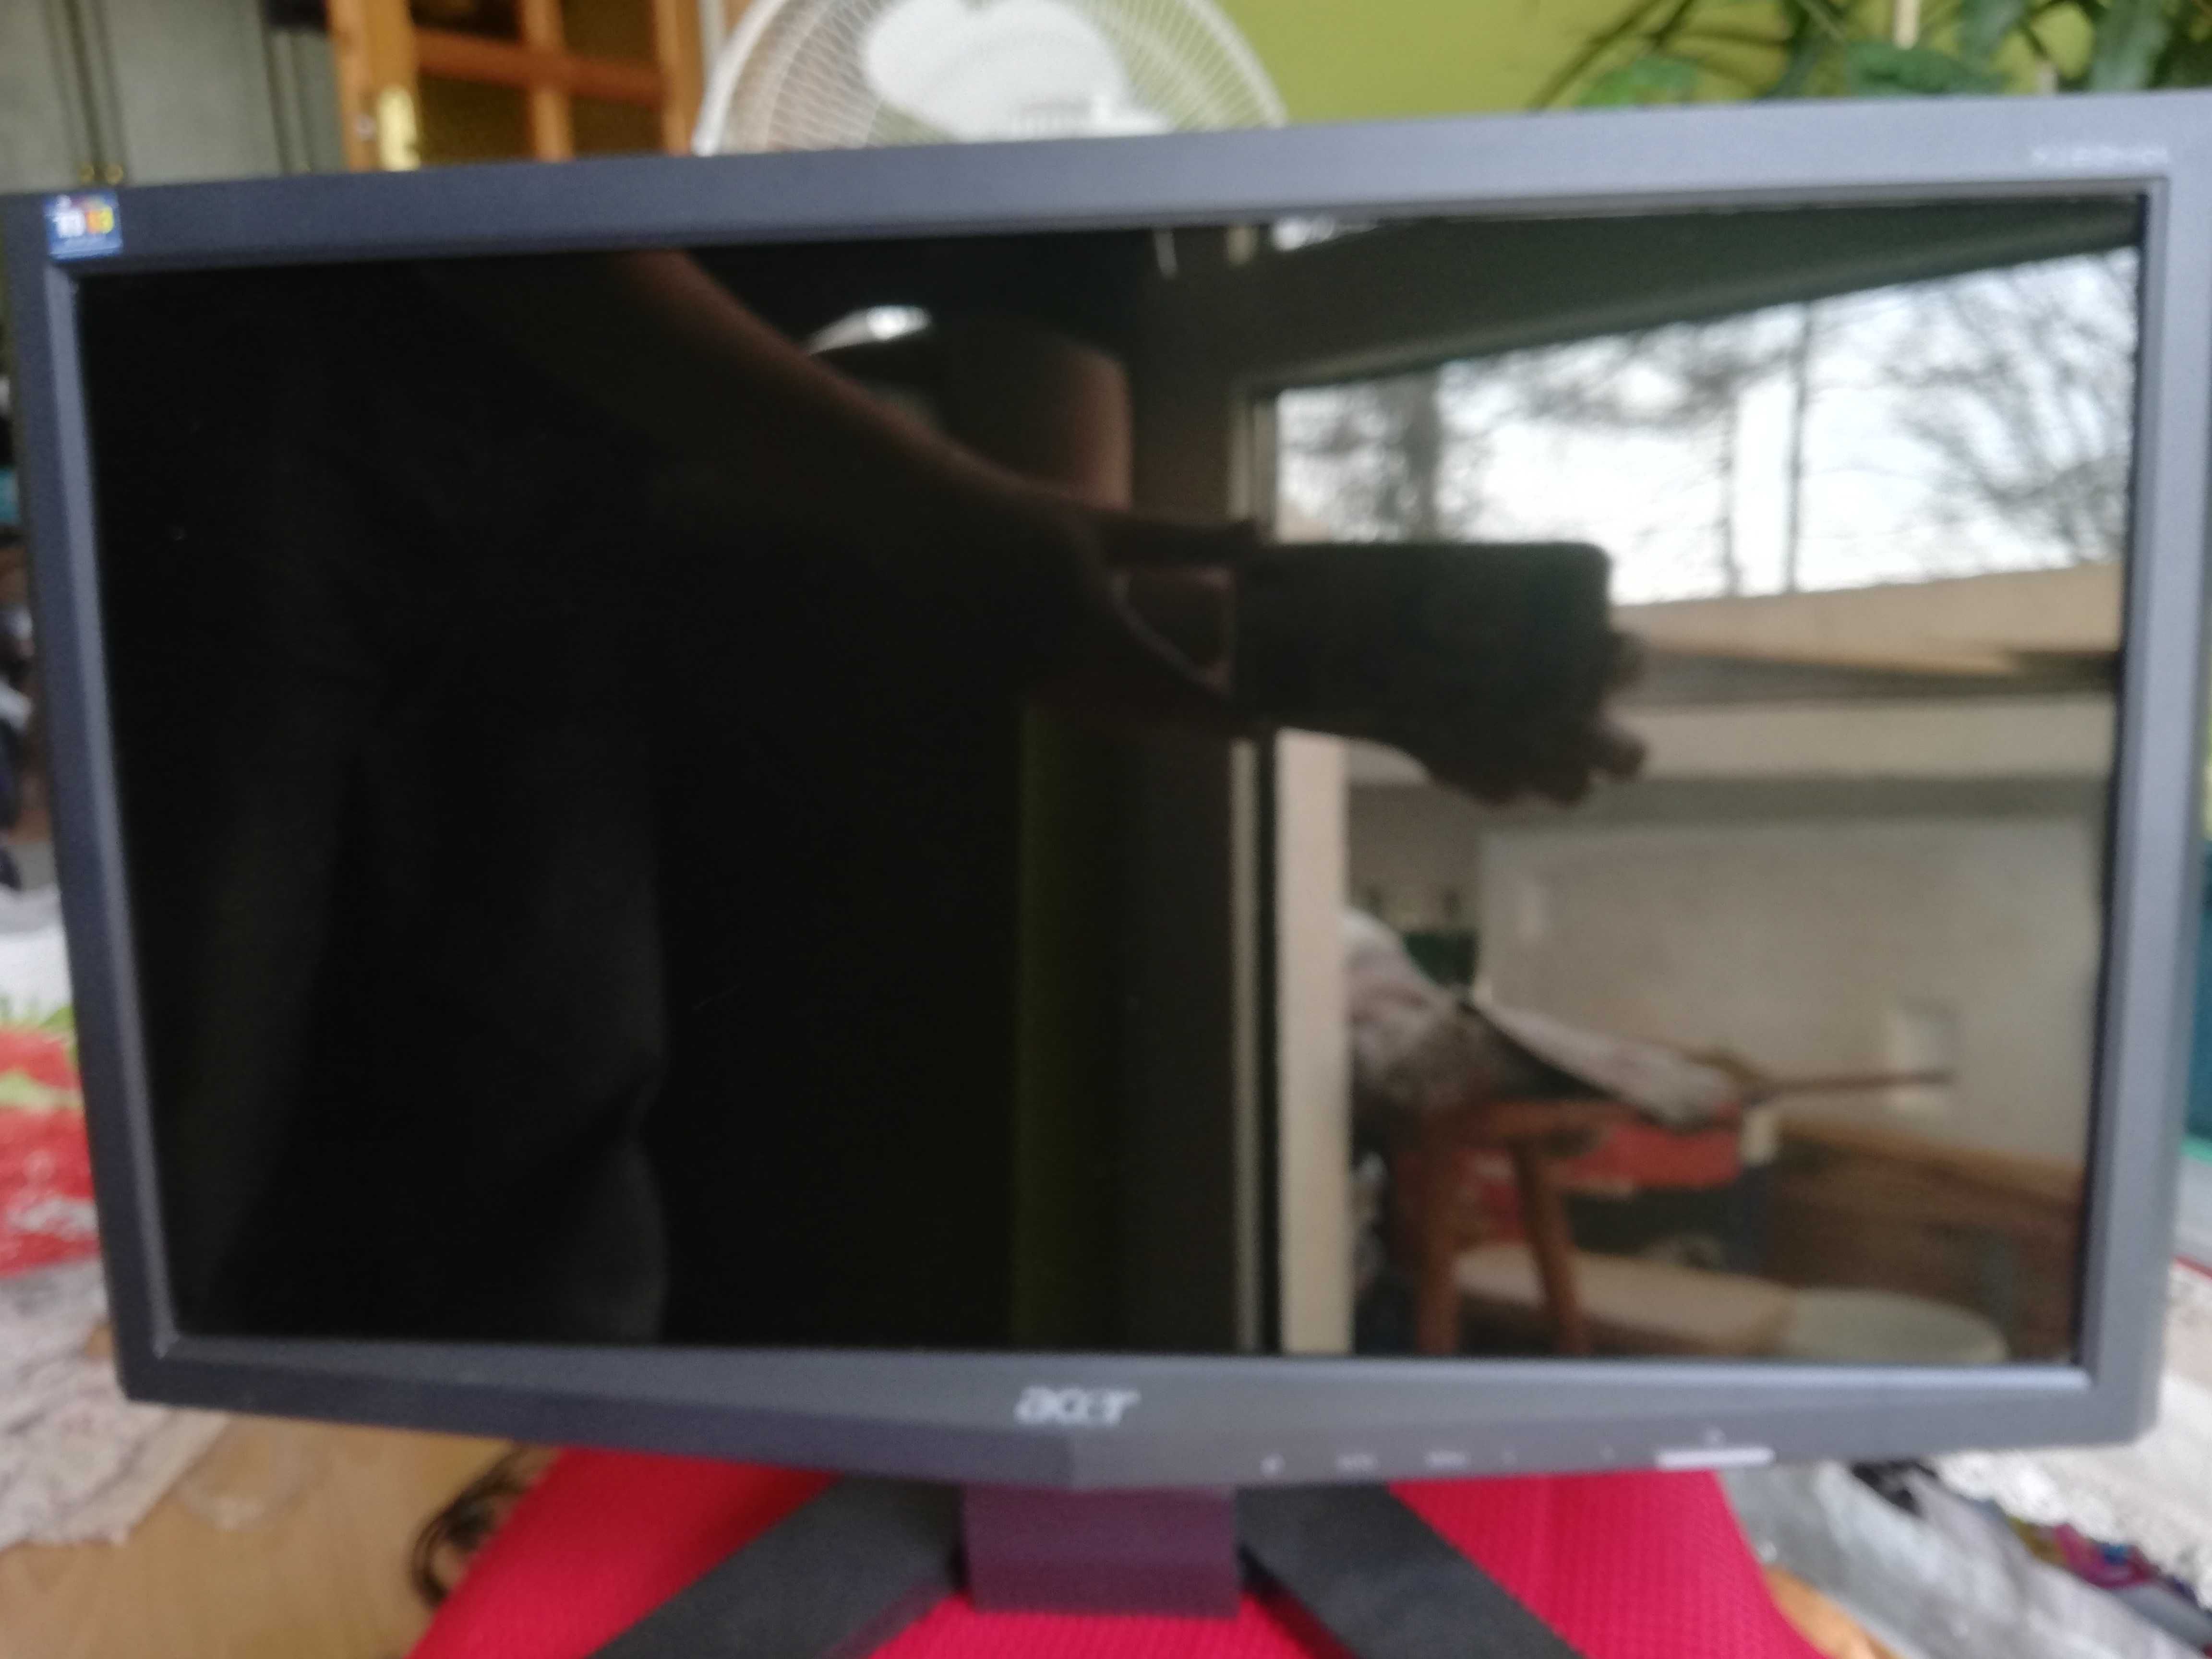 monitor acer do komputer jak na zdjęciu 25cali